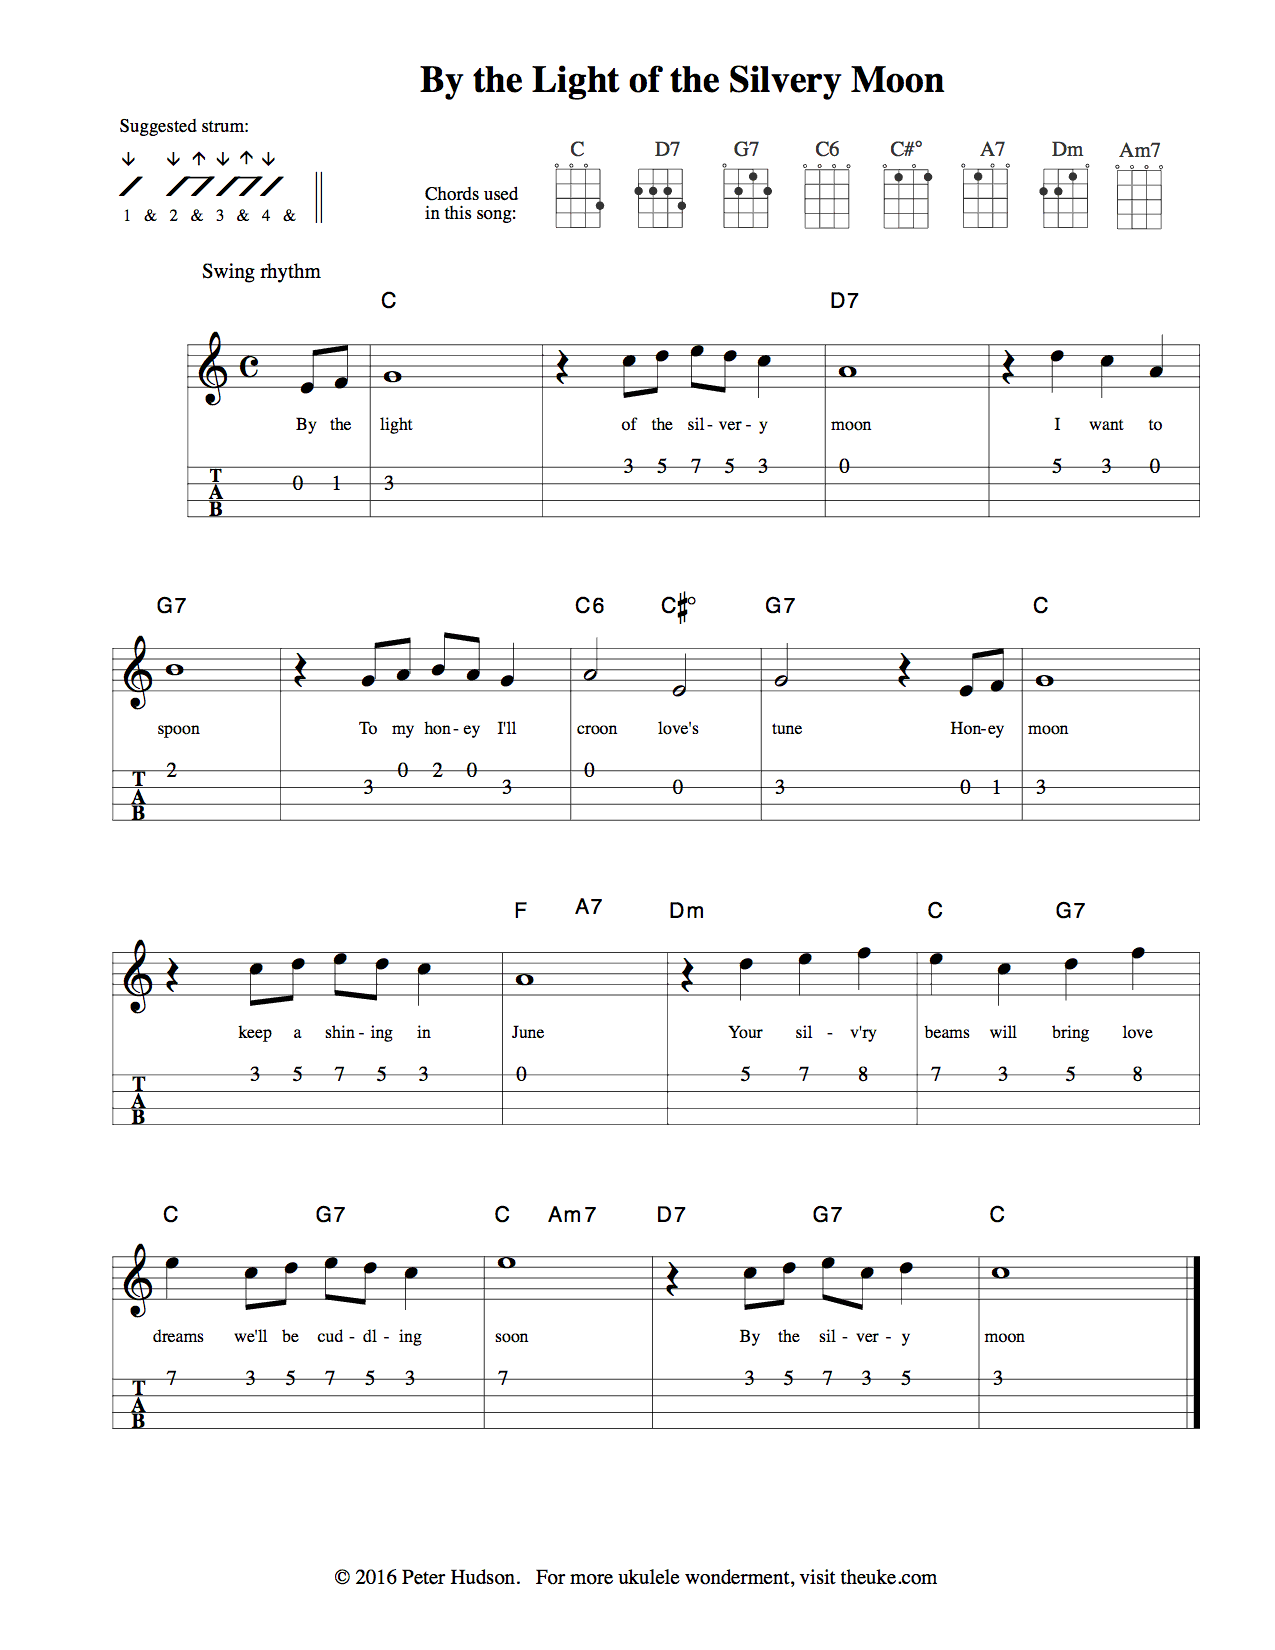 ukulele songbook free download